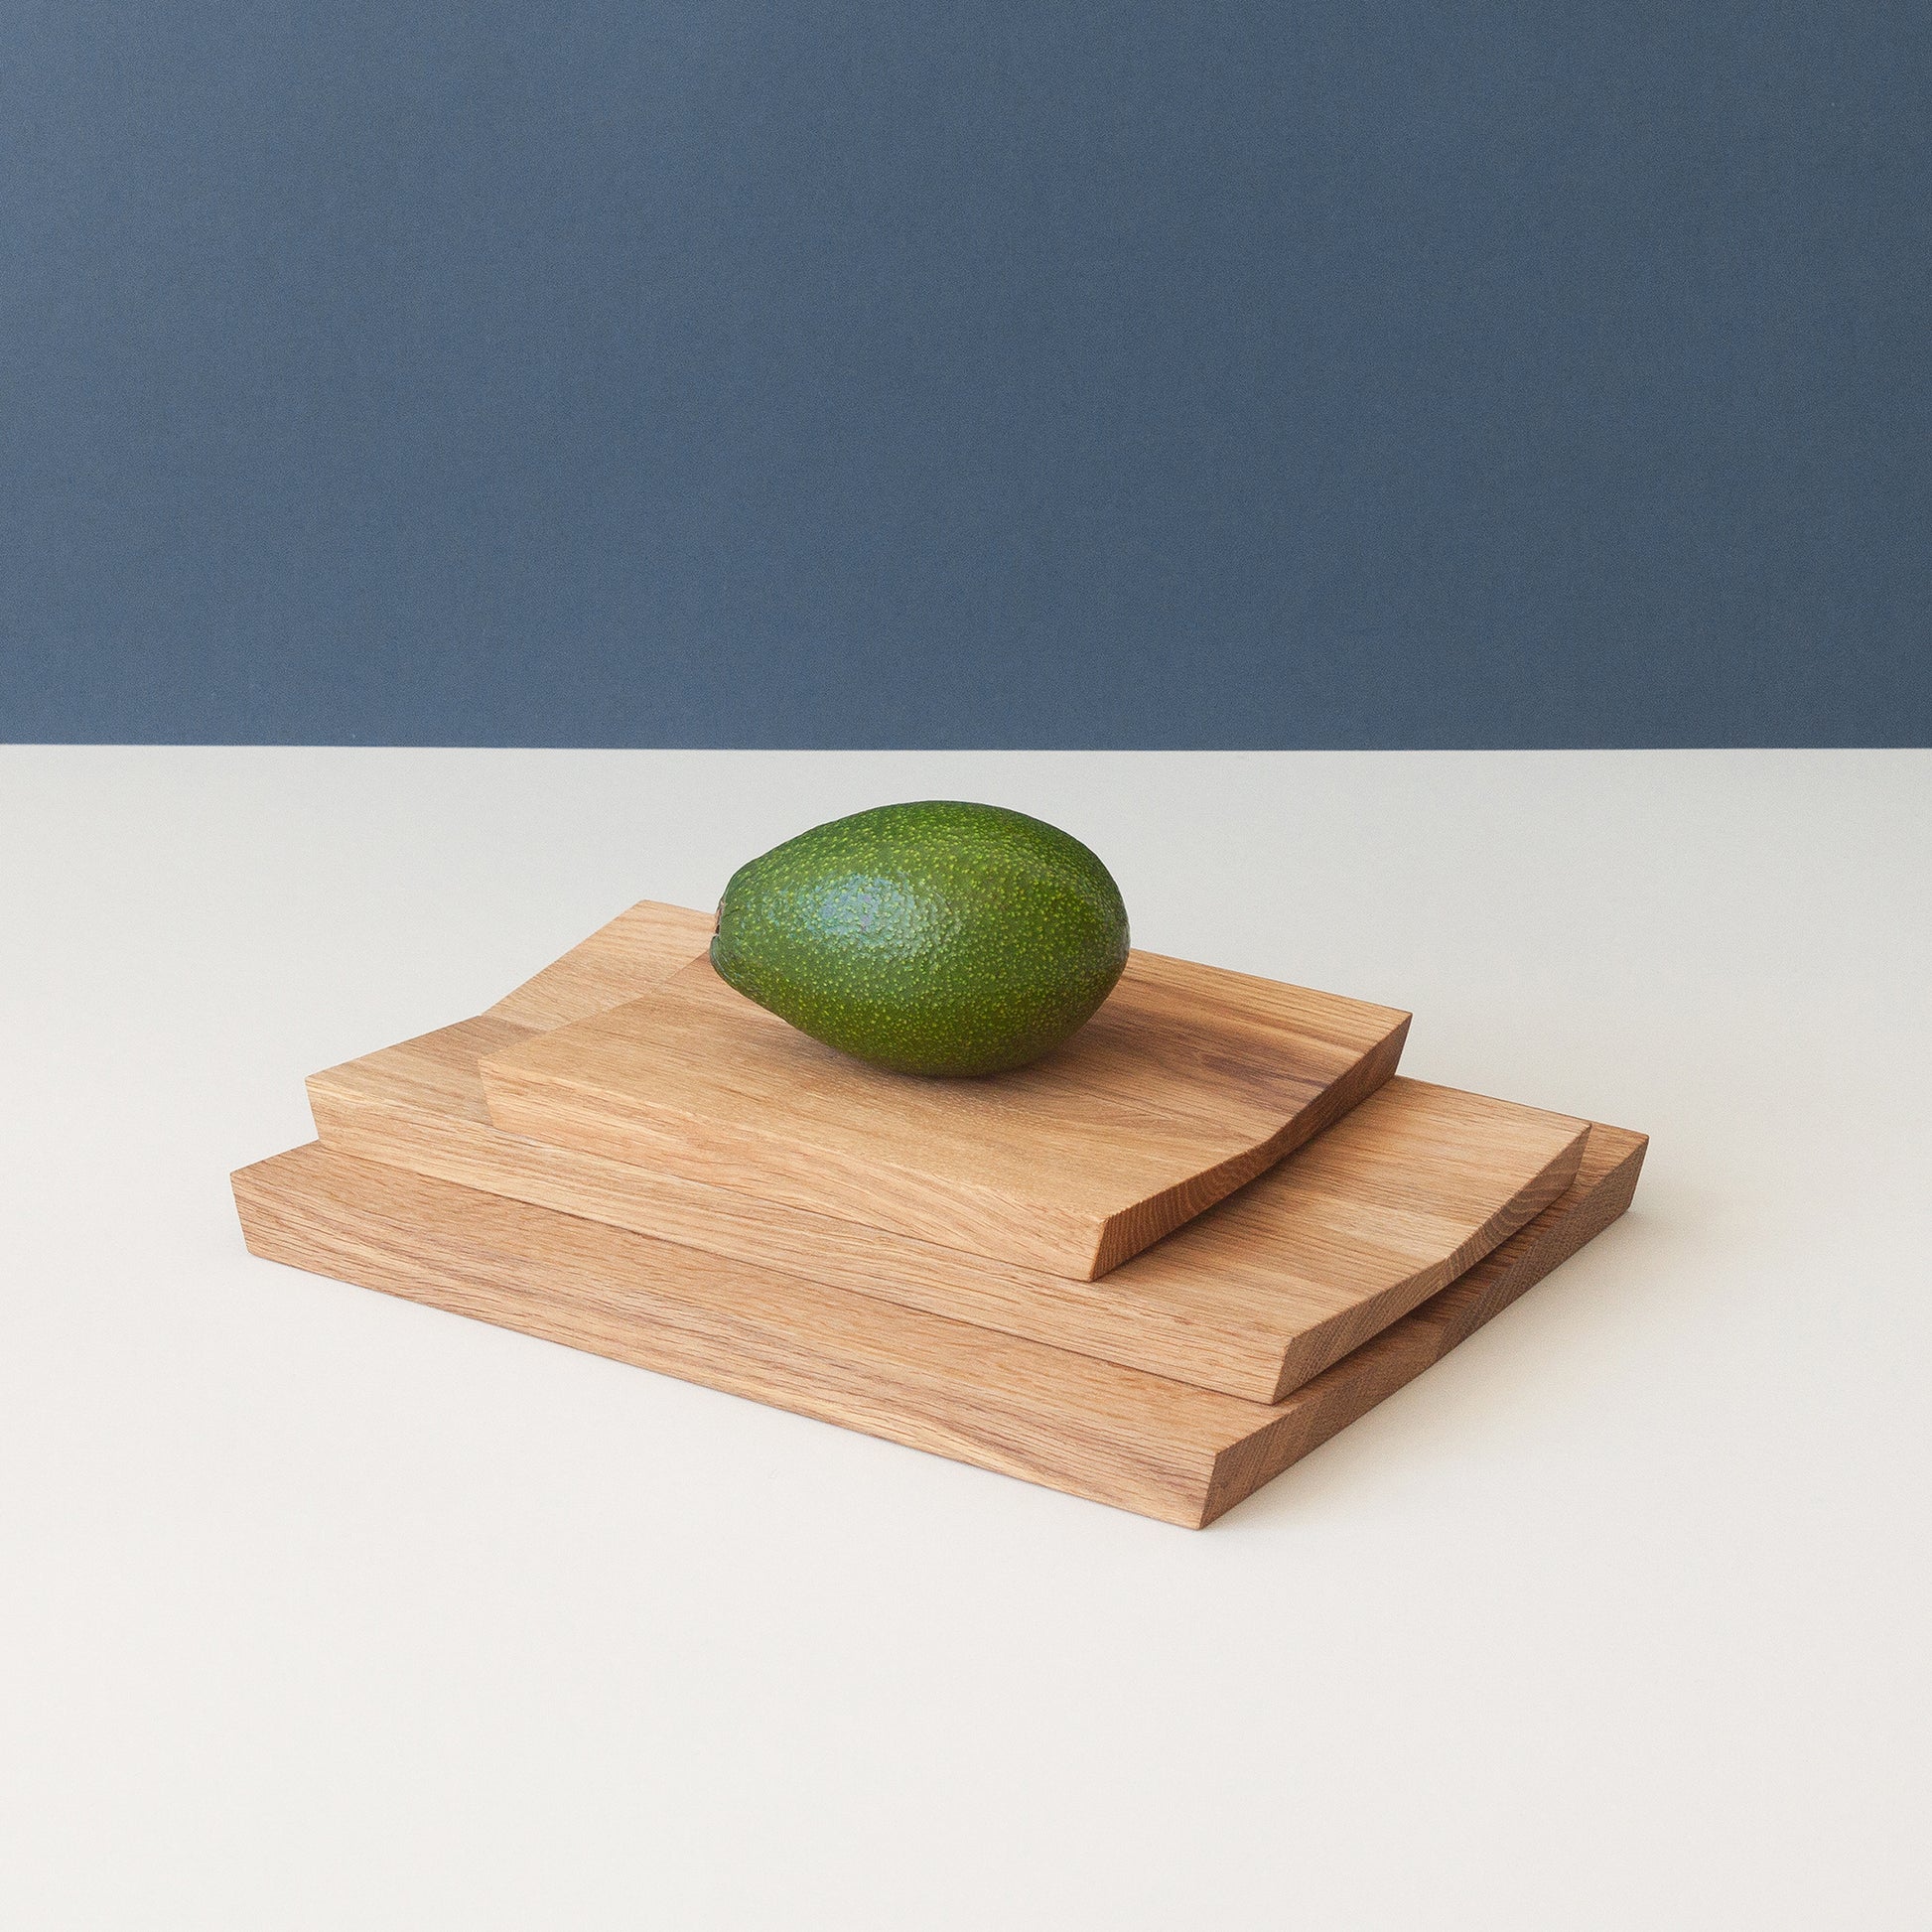 Minumo modern wooden cutting and serving board estonian design